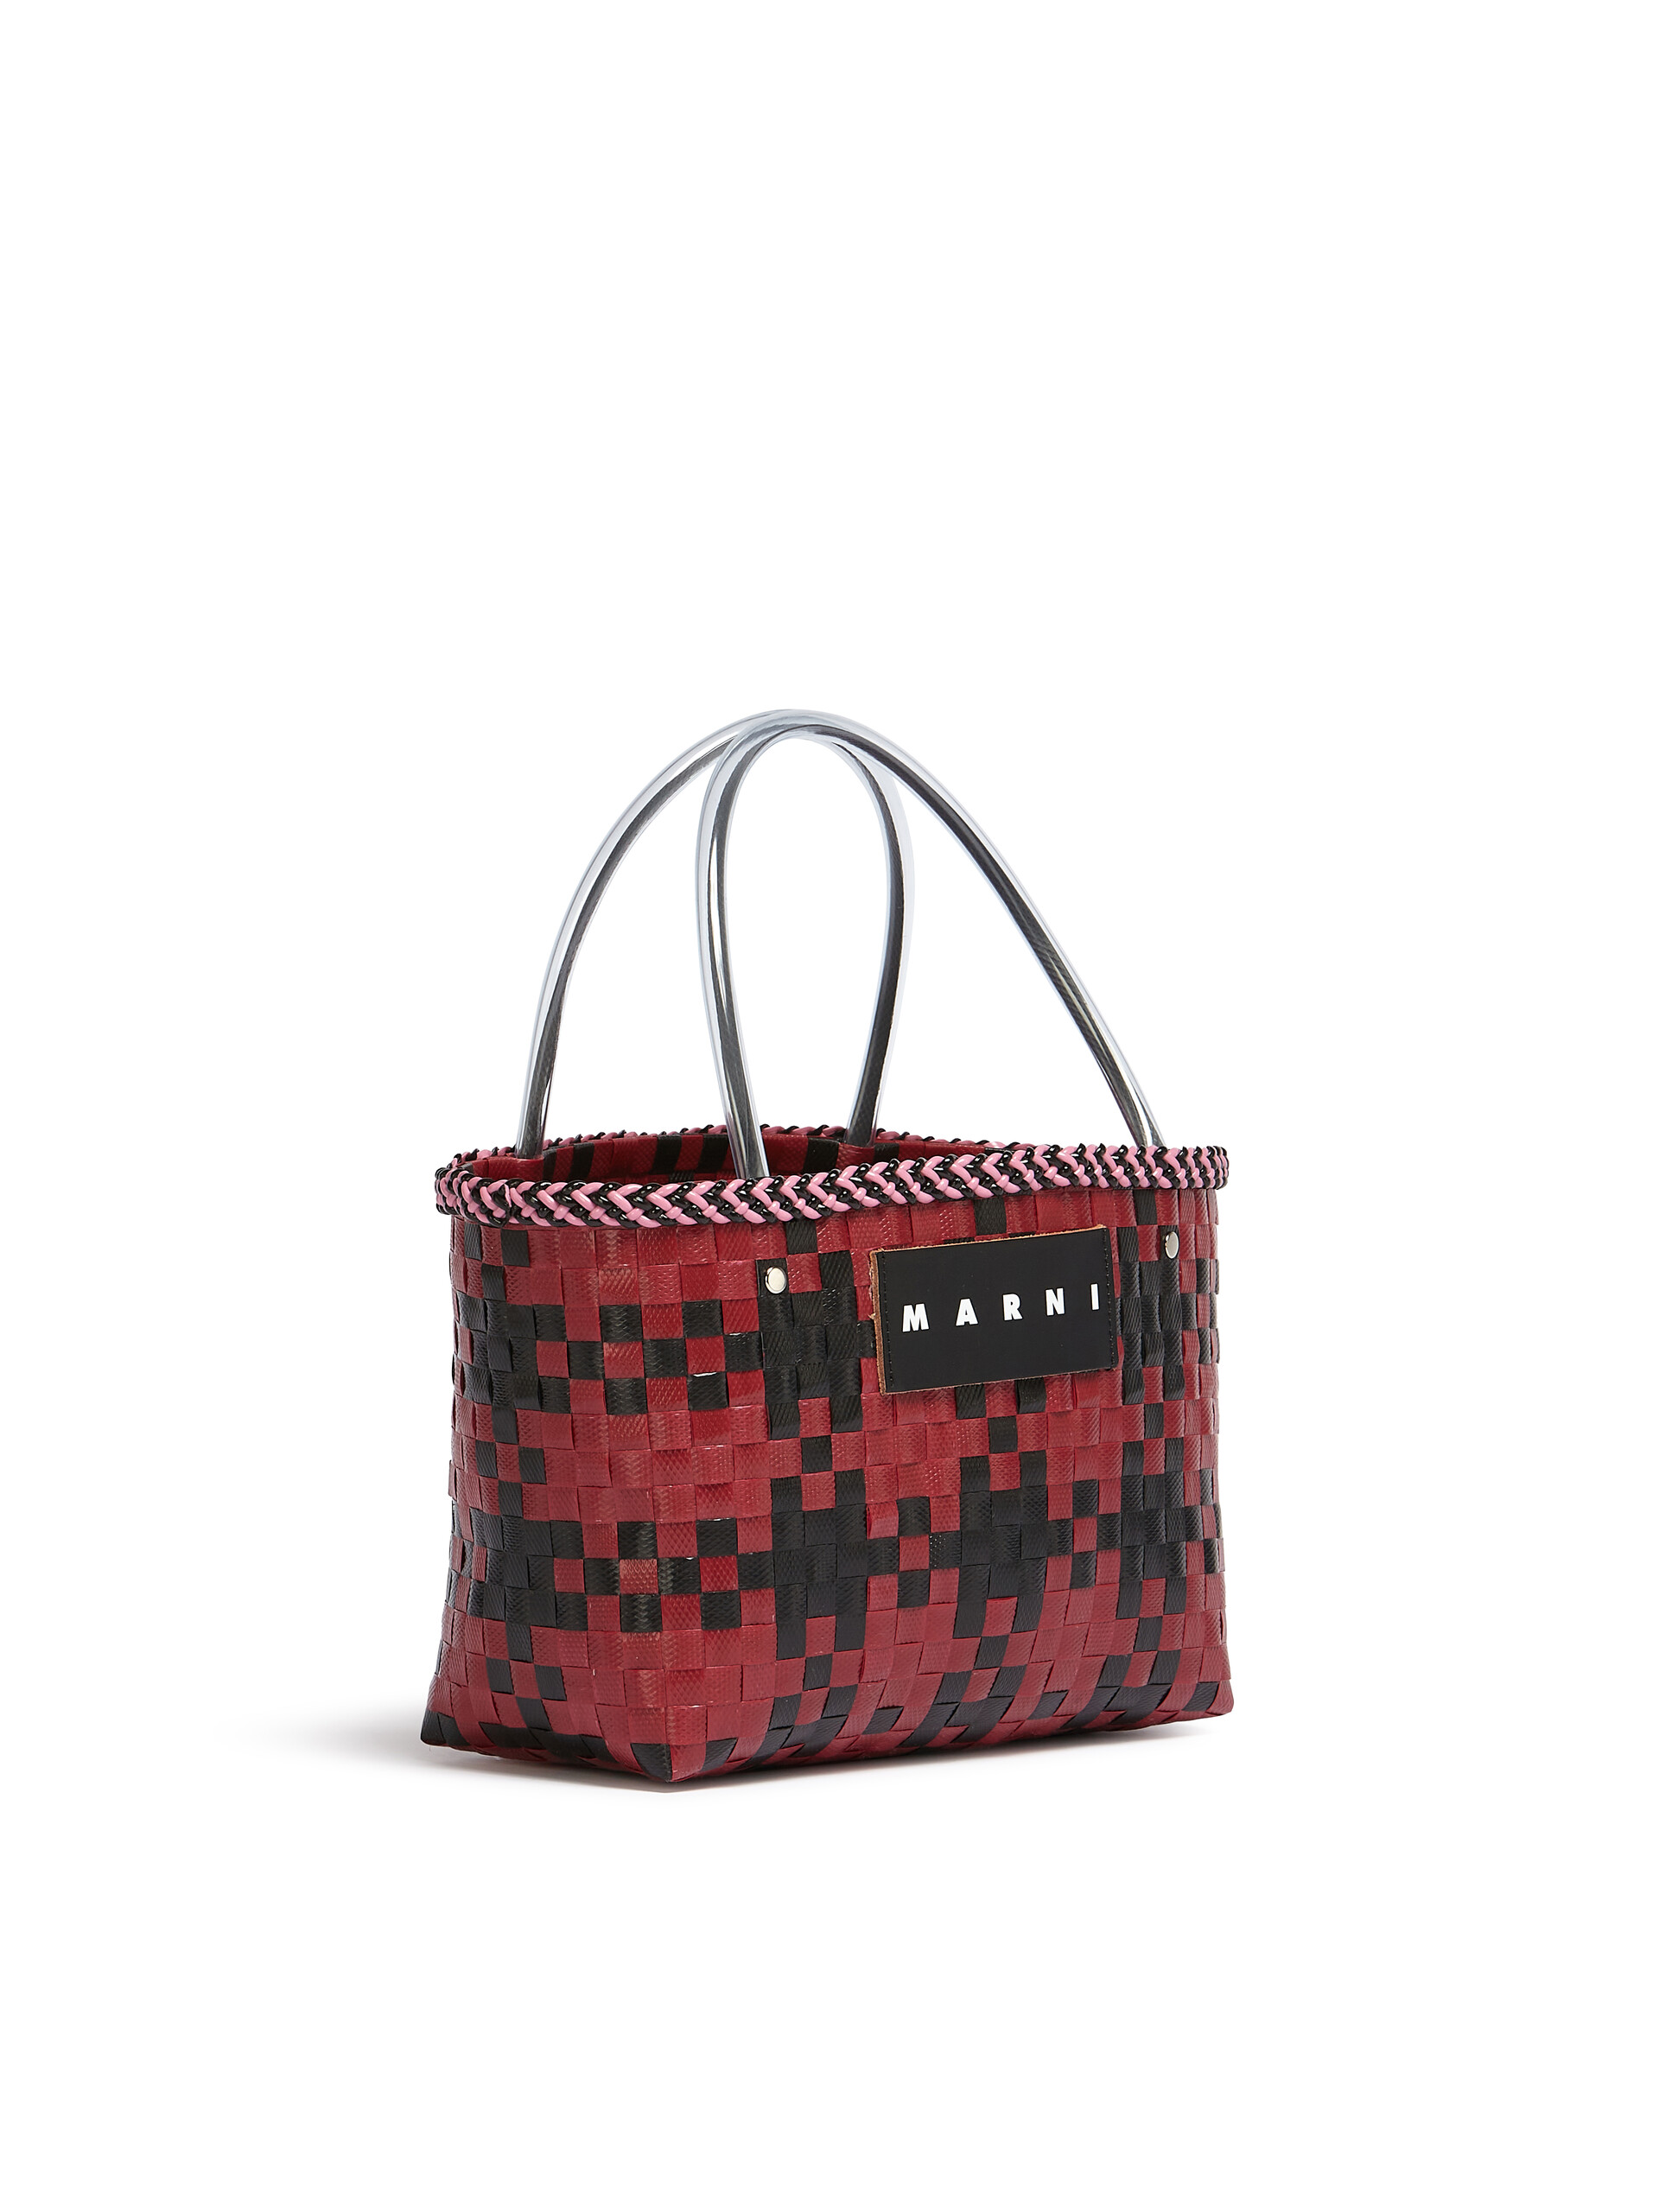 MARNI MARKET CHECK BAG in burgundy tartan woven material - Bags - Image 2